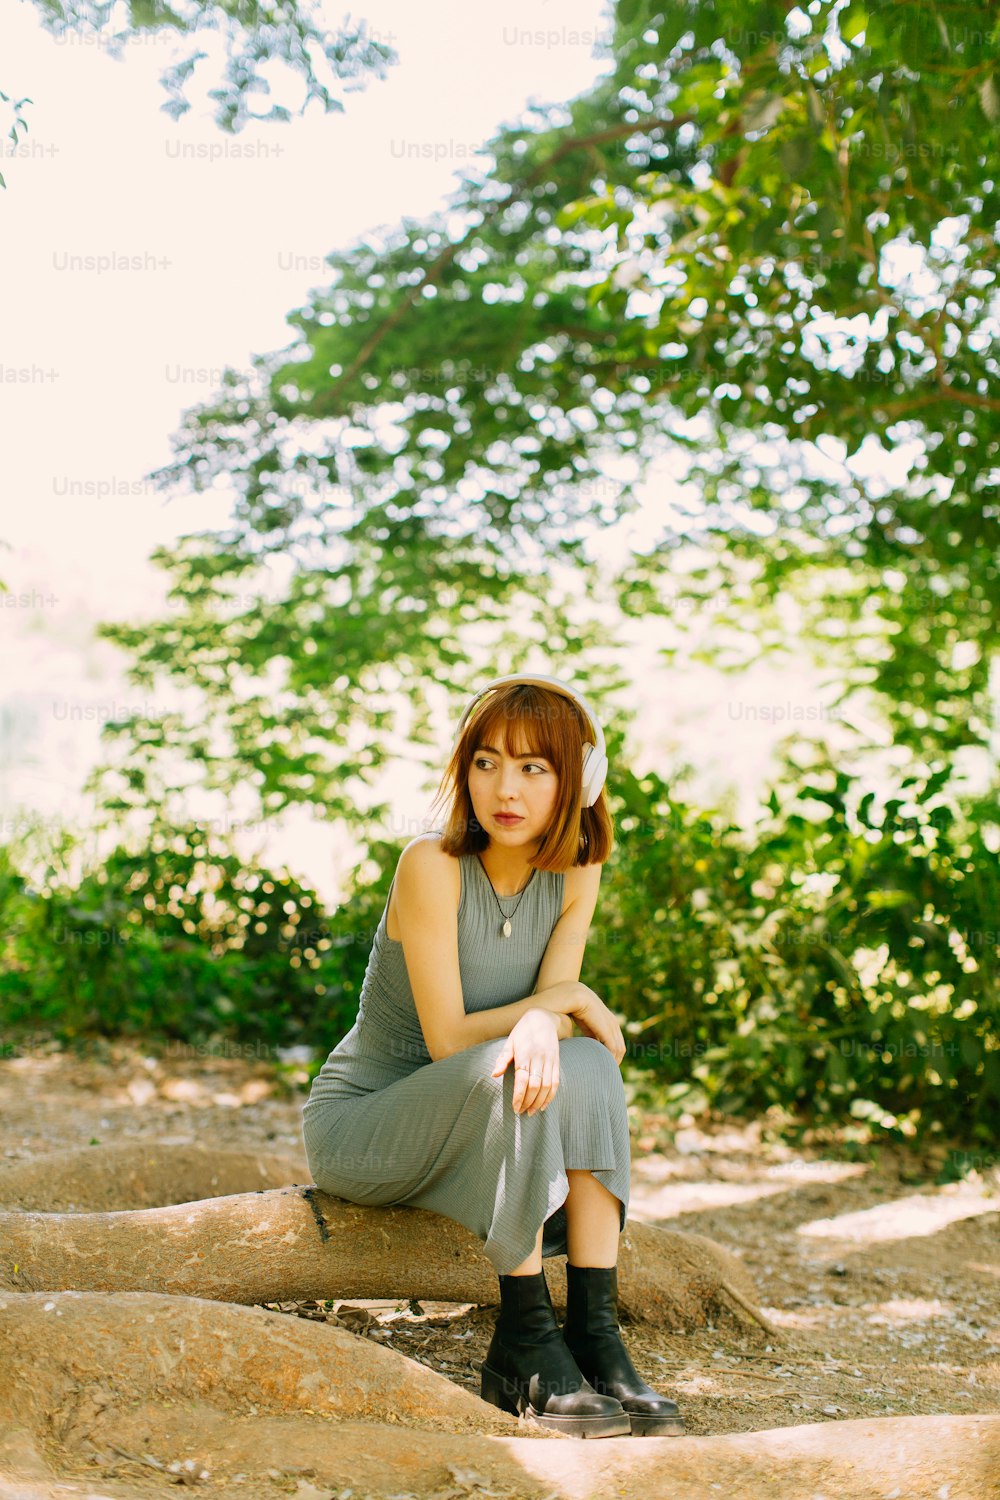 Una donna seduta su una roccia in una foresta